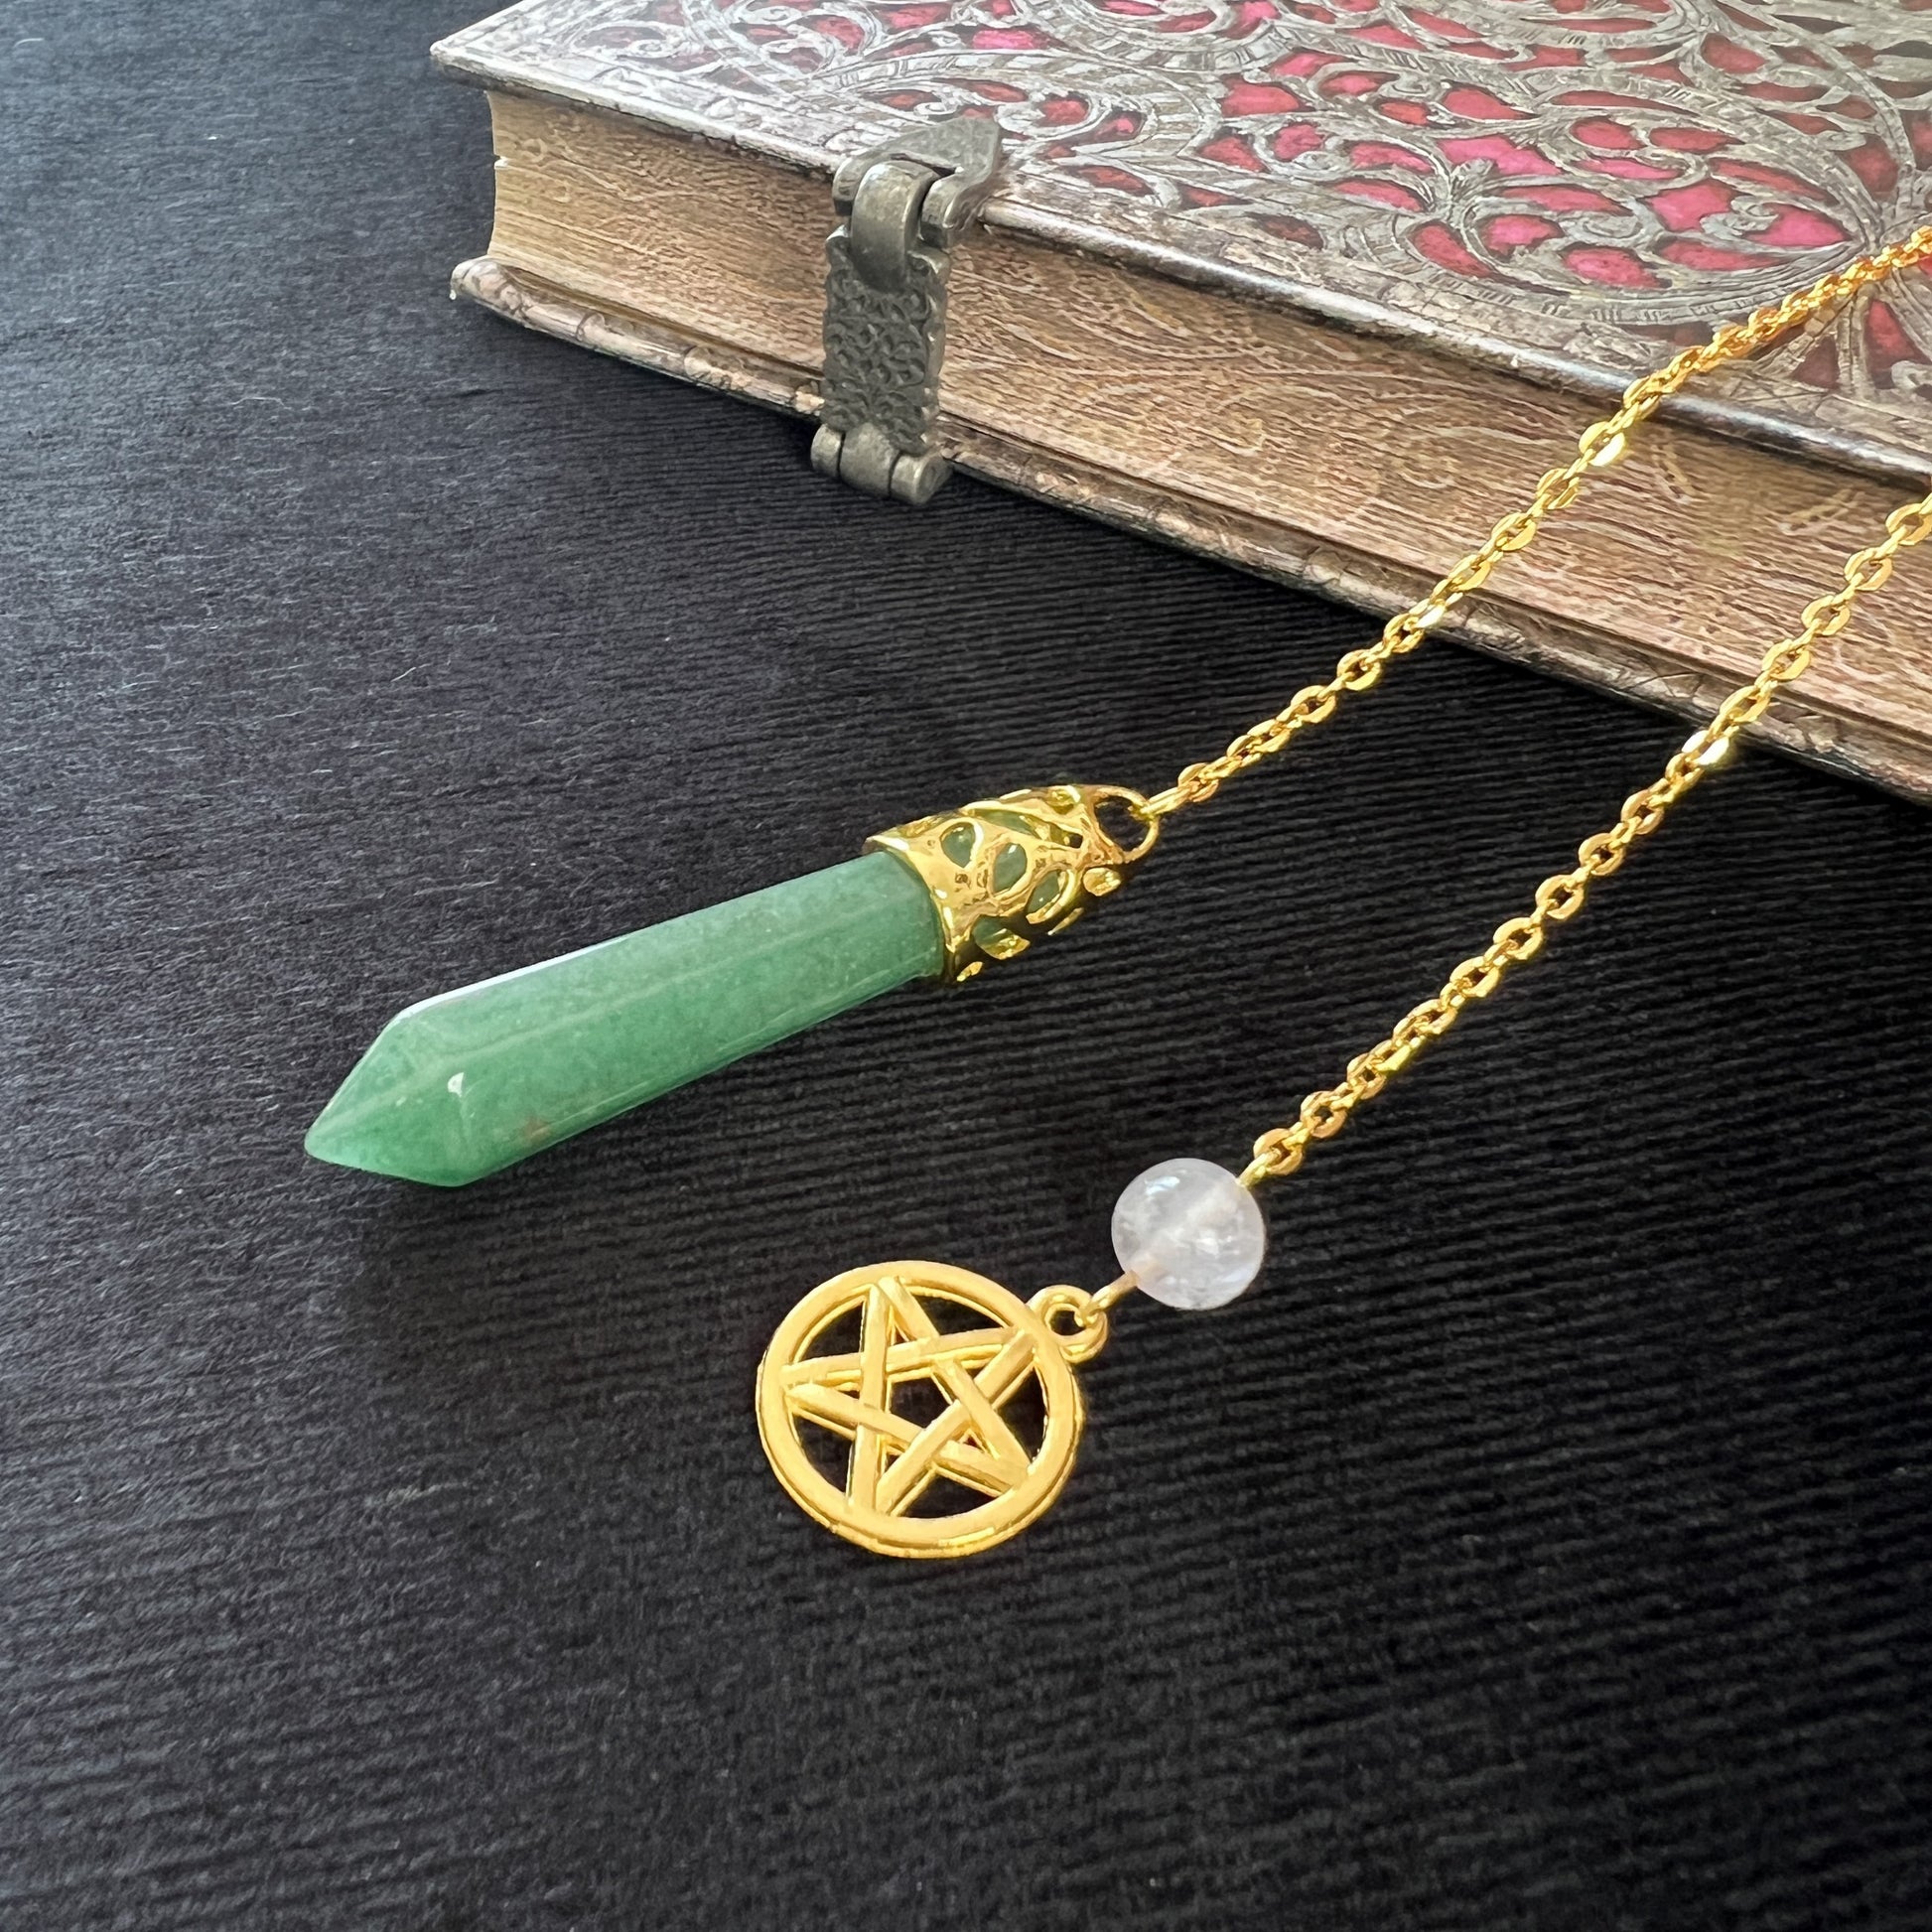 Aventurine and rose quartz pentacle gemstone pendulum for dowsing, healing, witchcraft